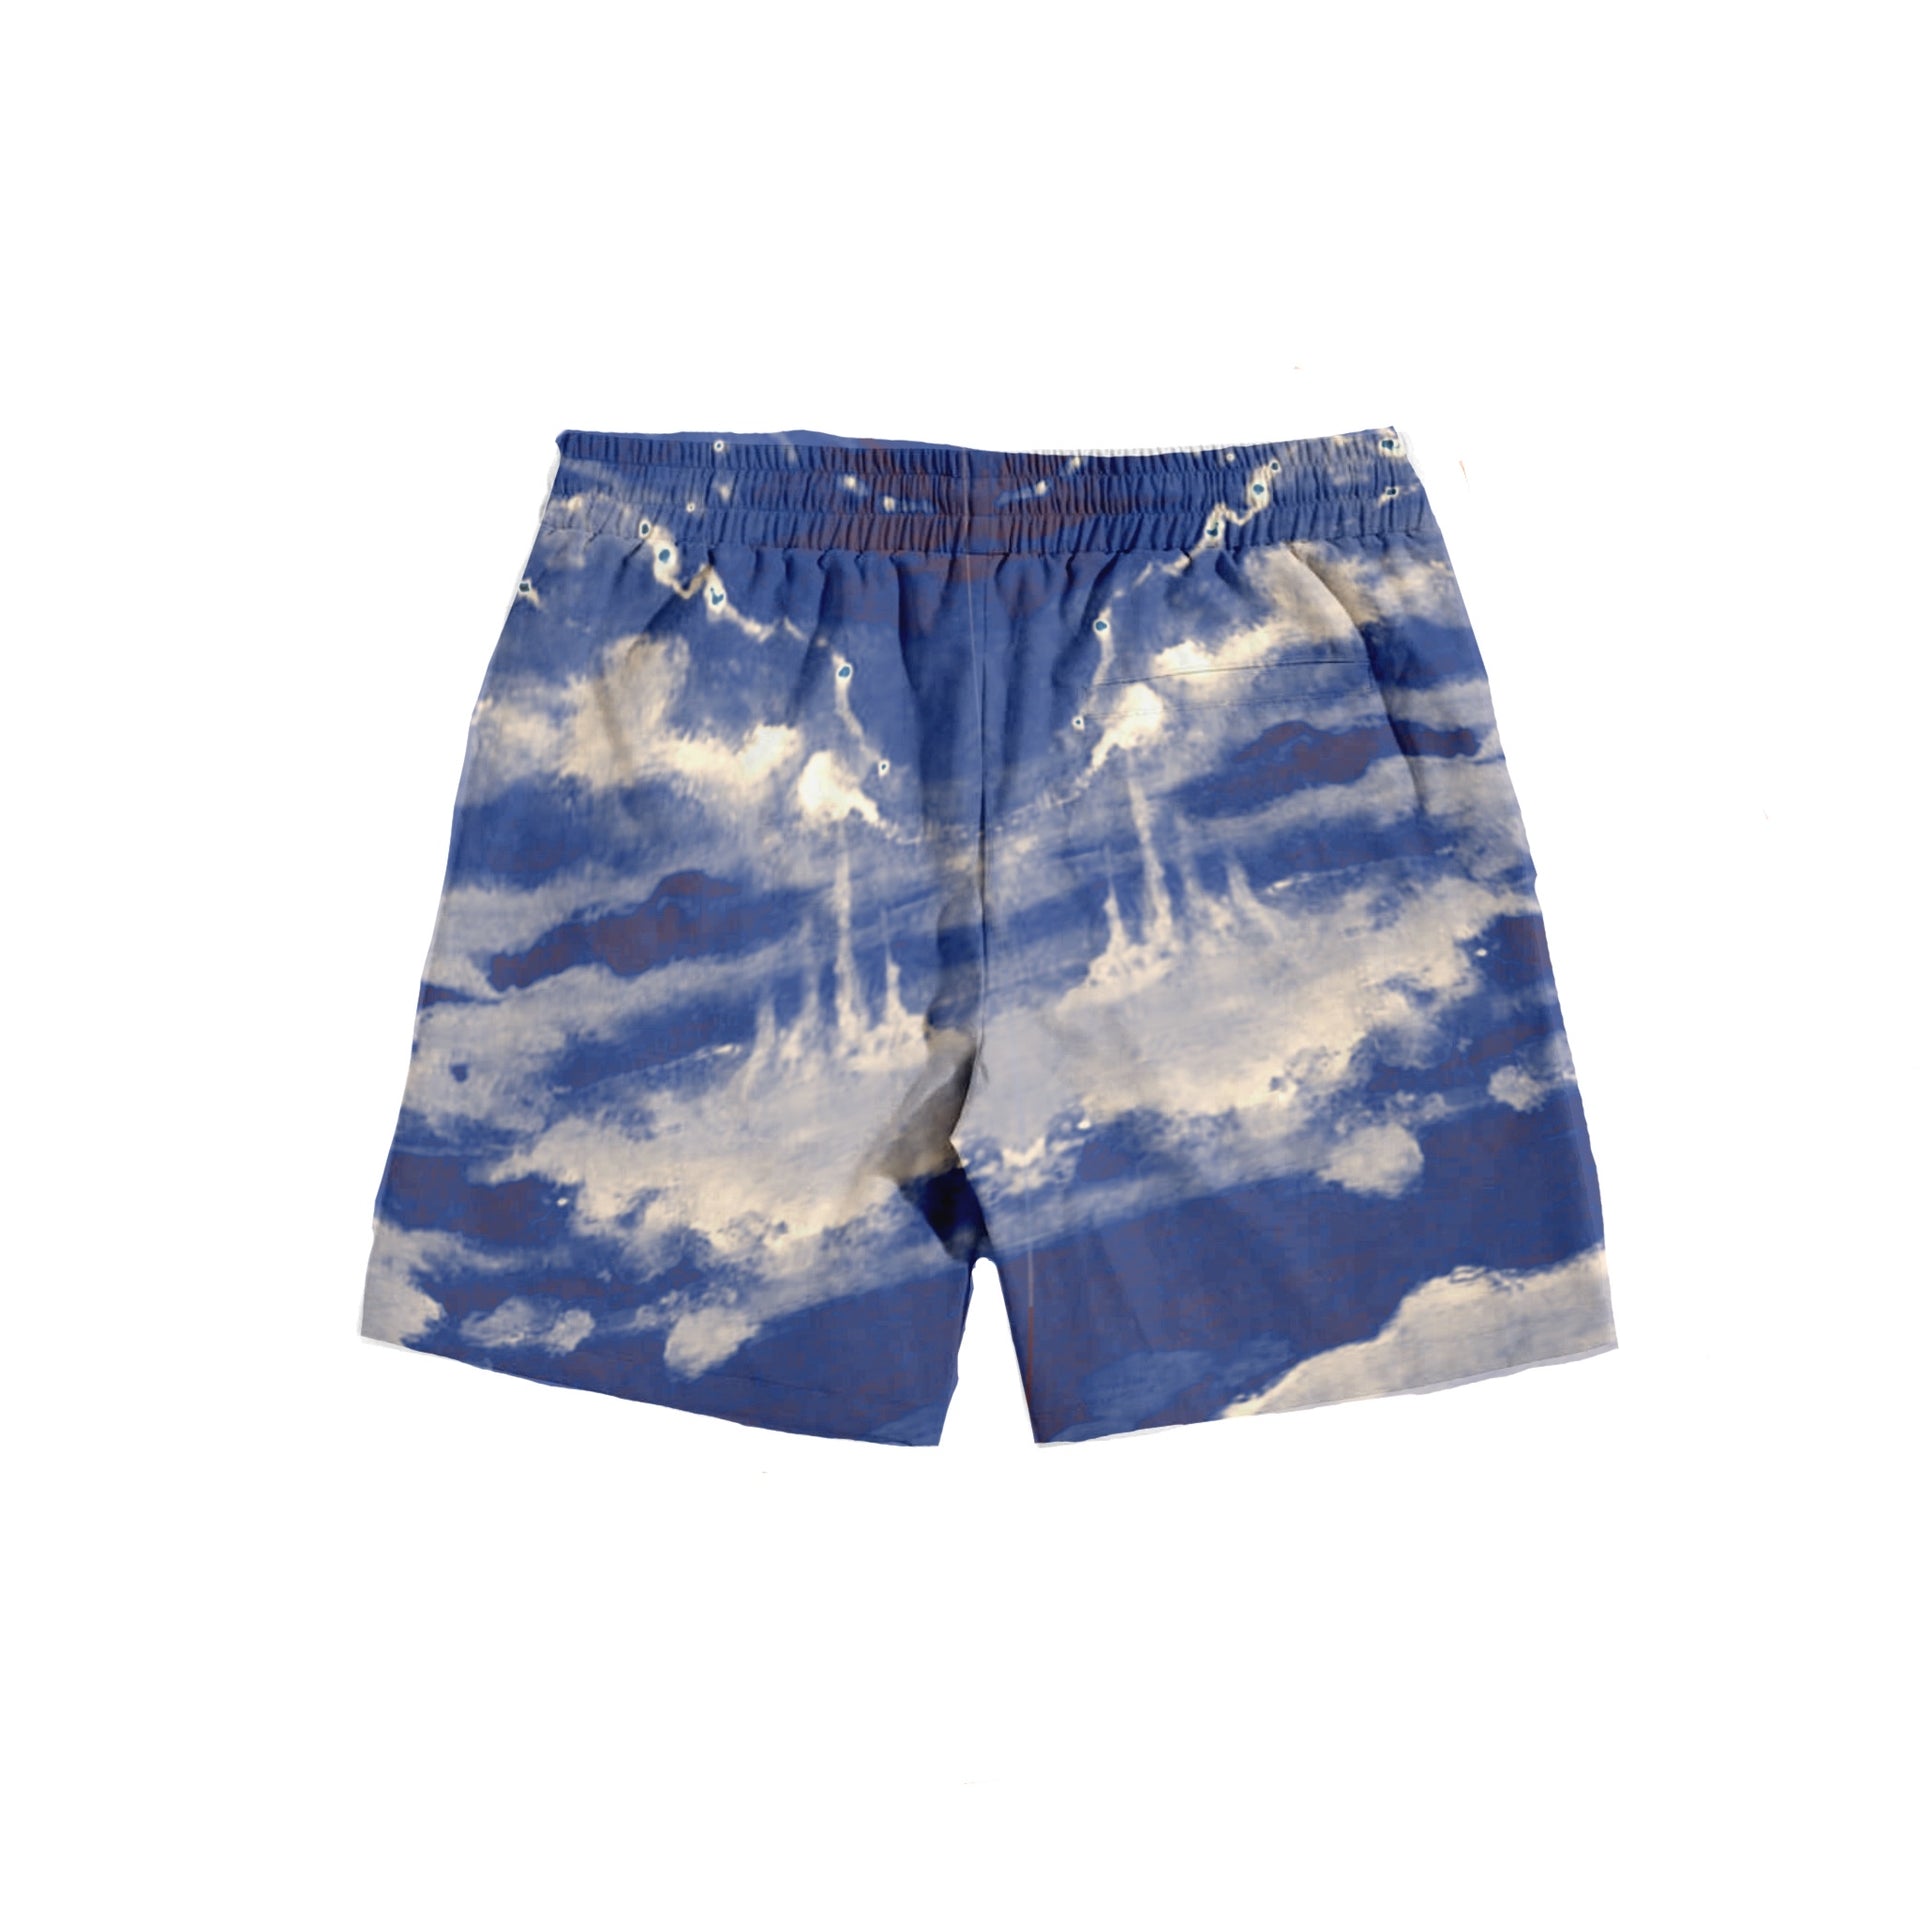 Dreamscape Shorts - BLUE